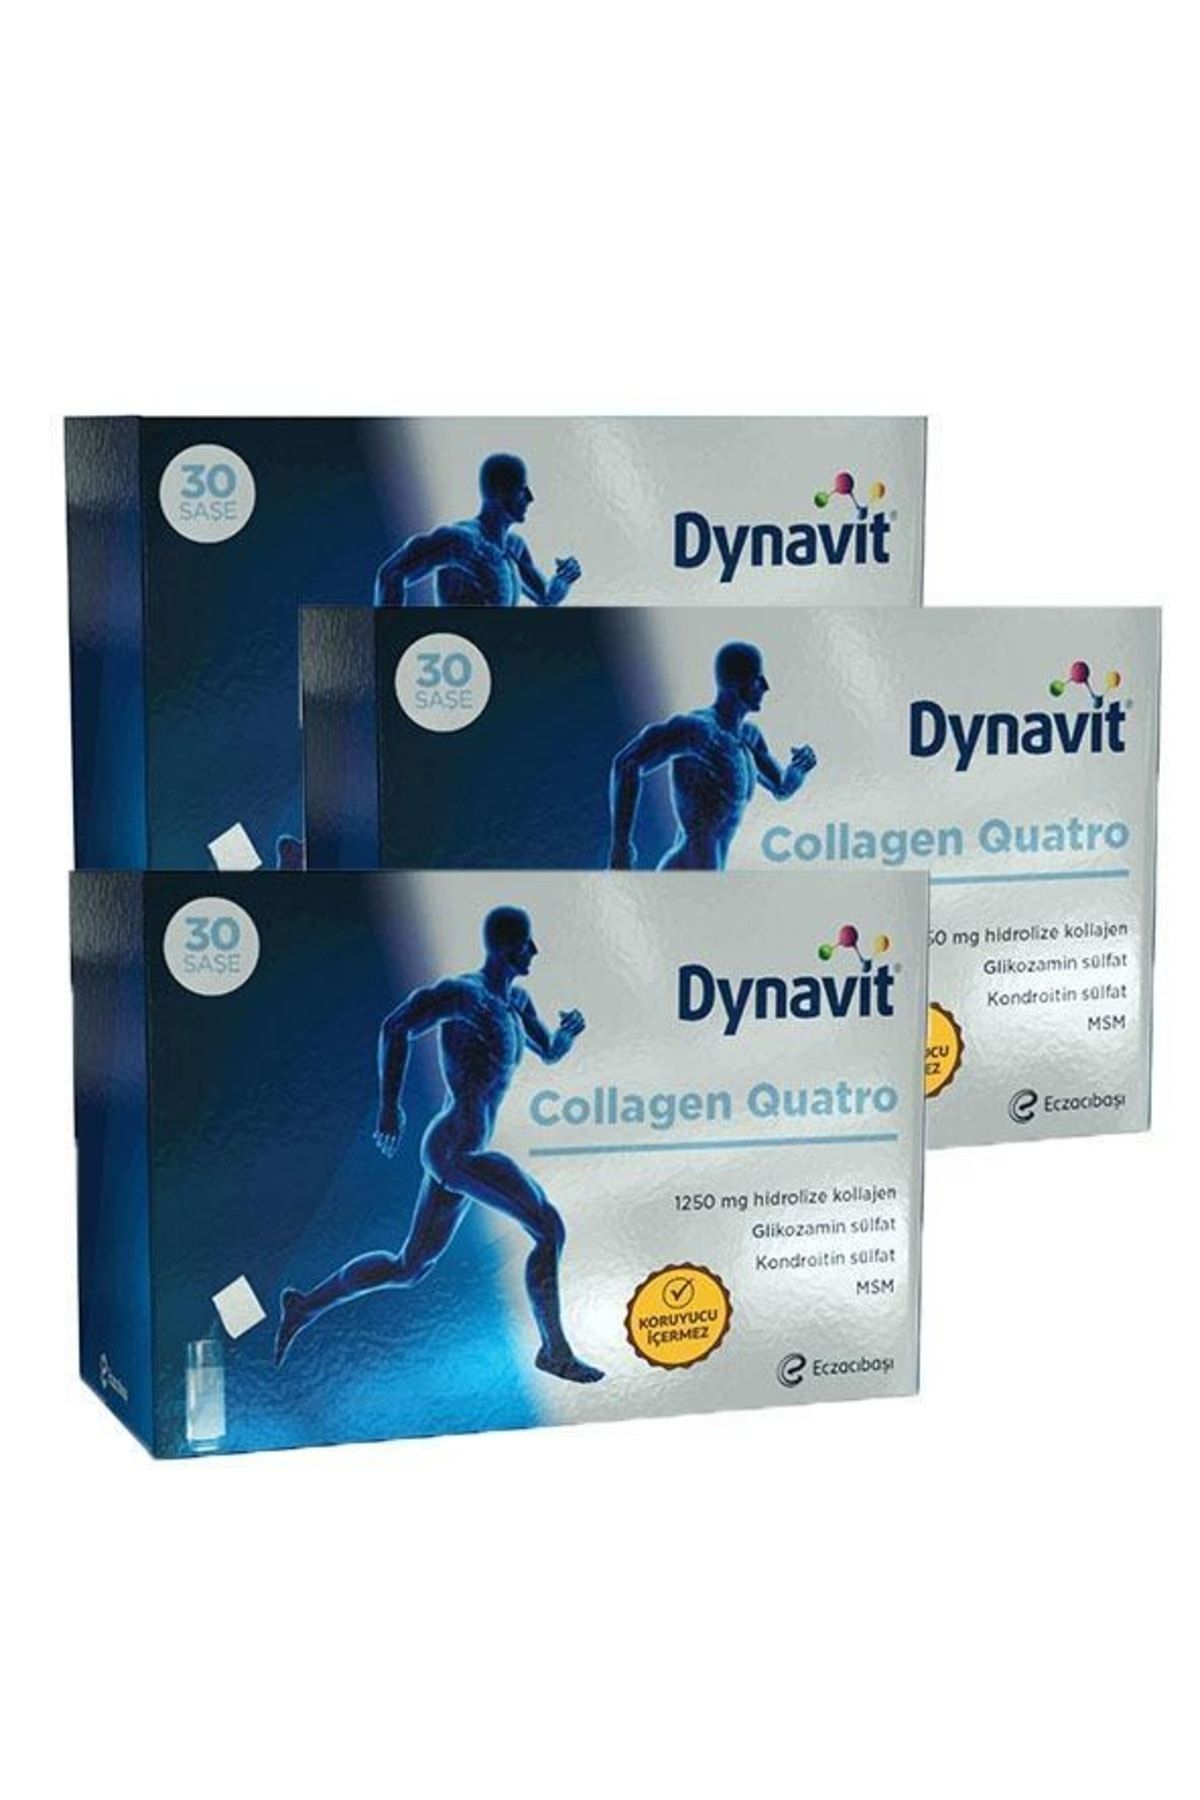 Dynavit Collagen Quatro 30 Saşe 3 Adet